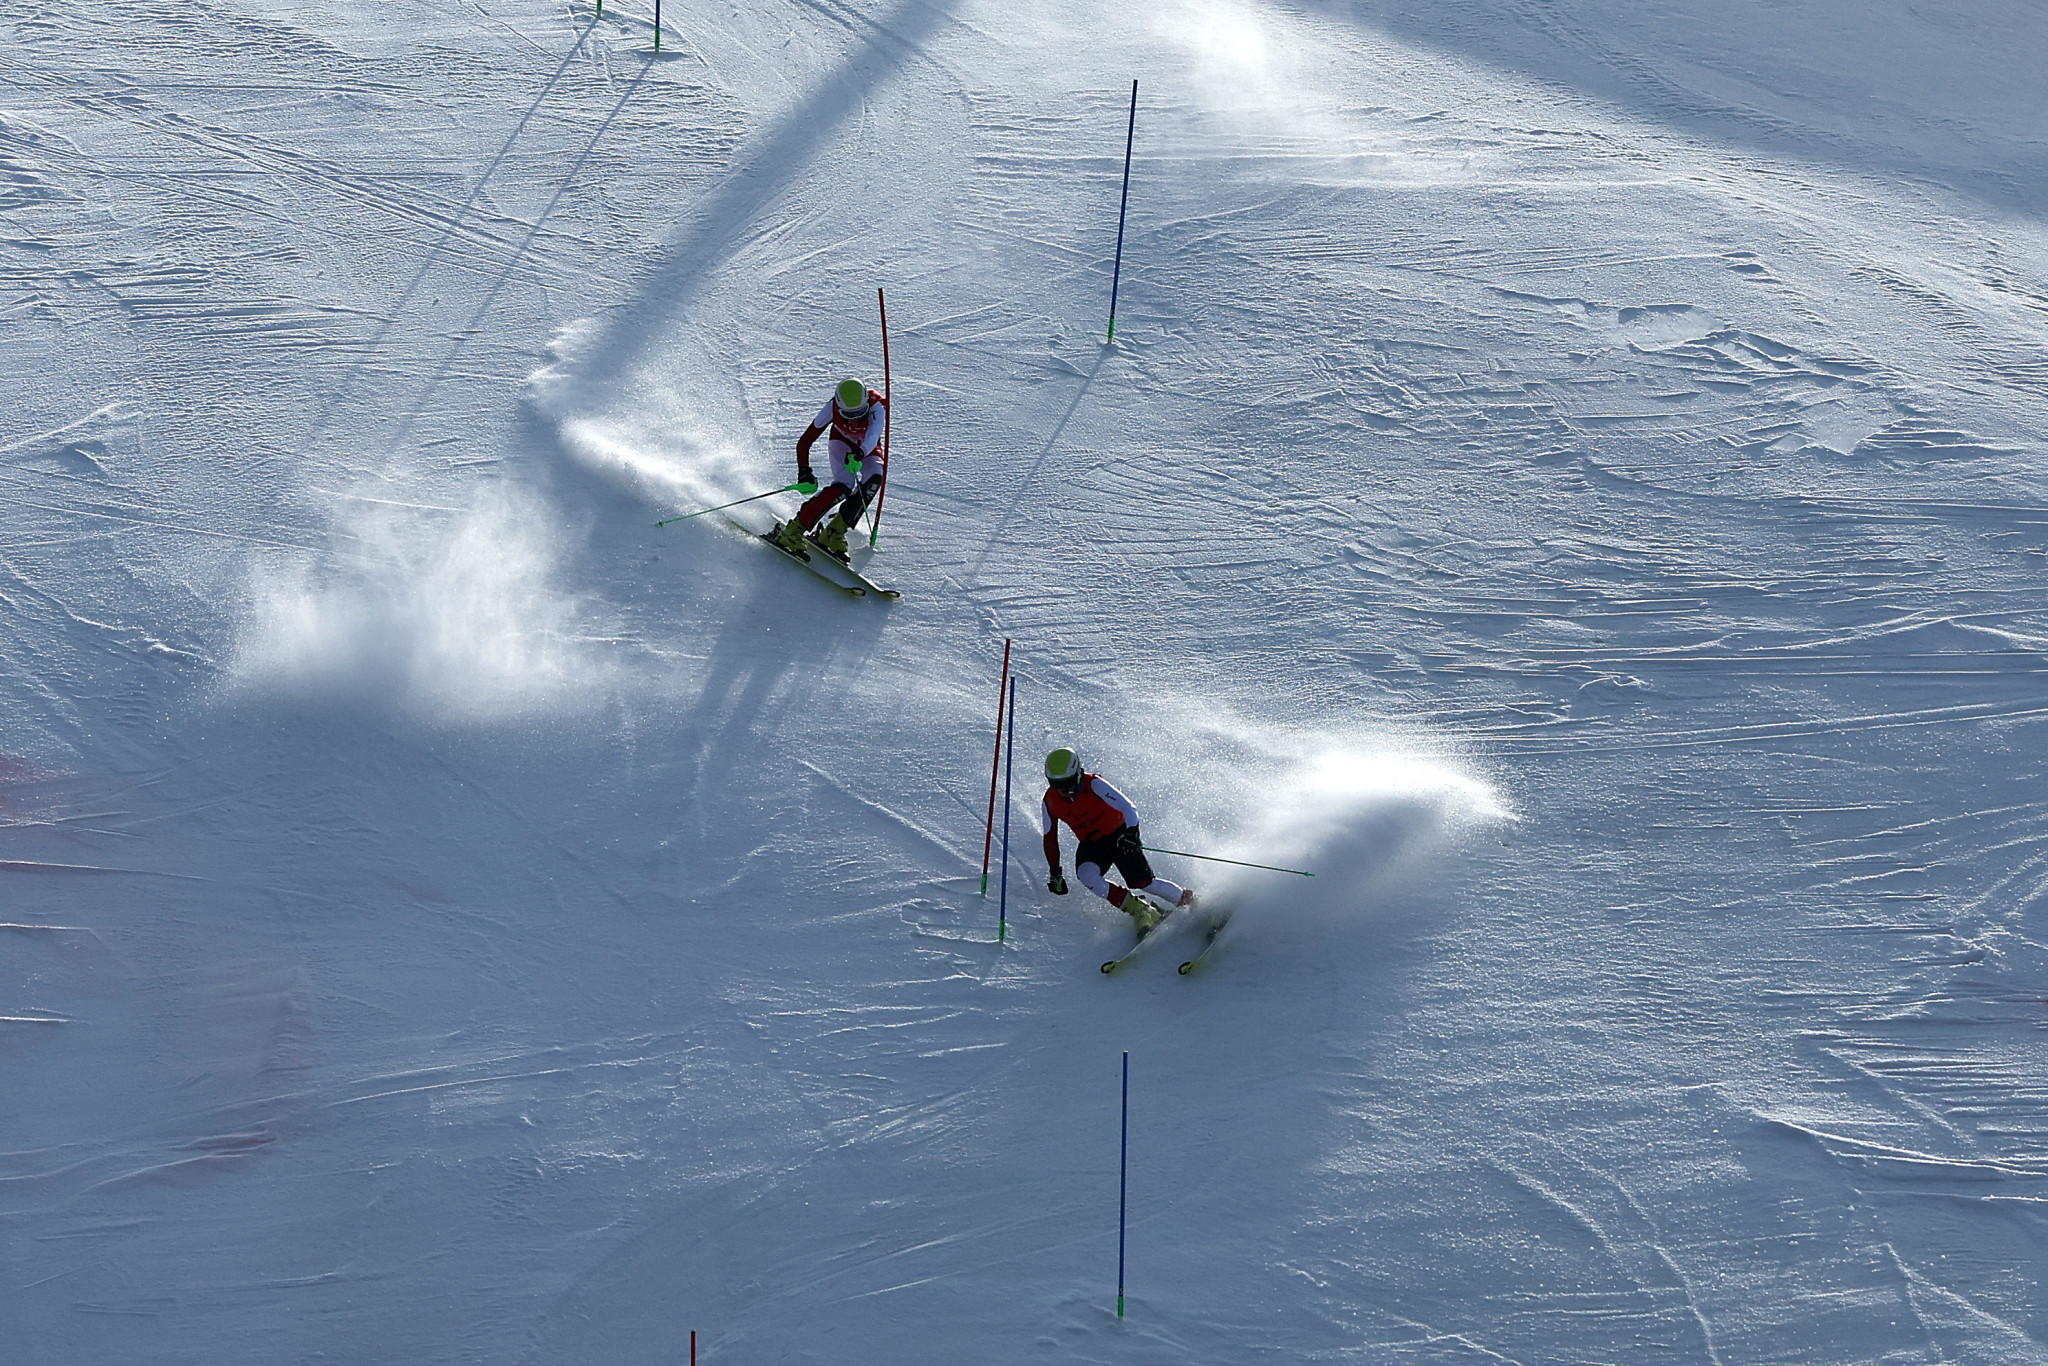 Austria sit at the summit after World Para Alpine Skiing Championships